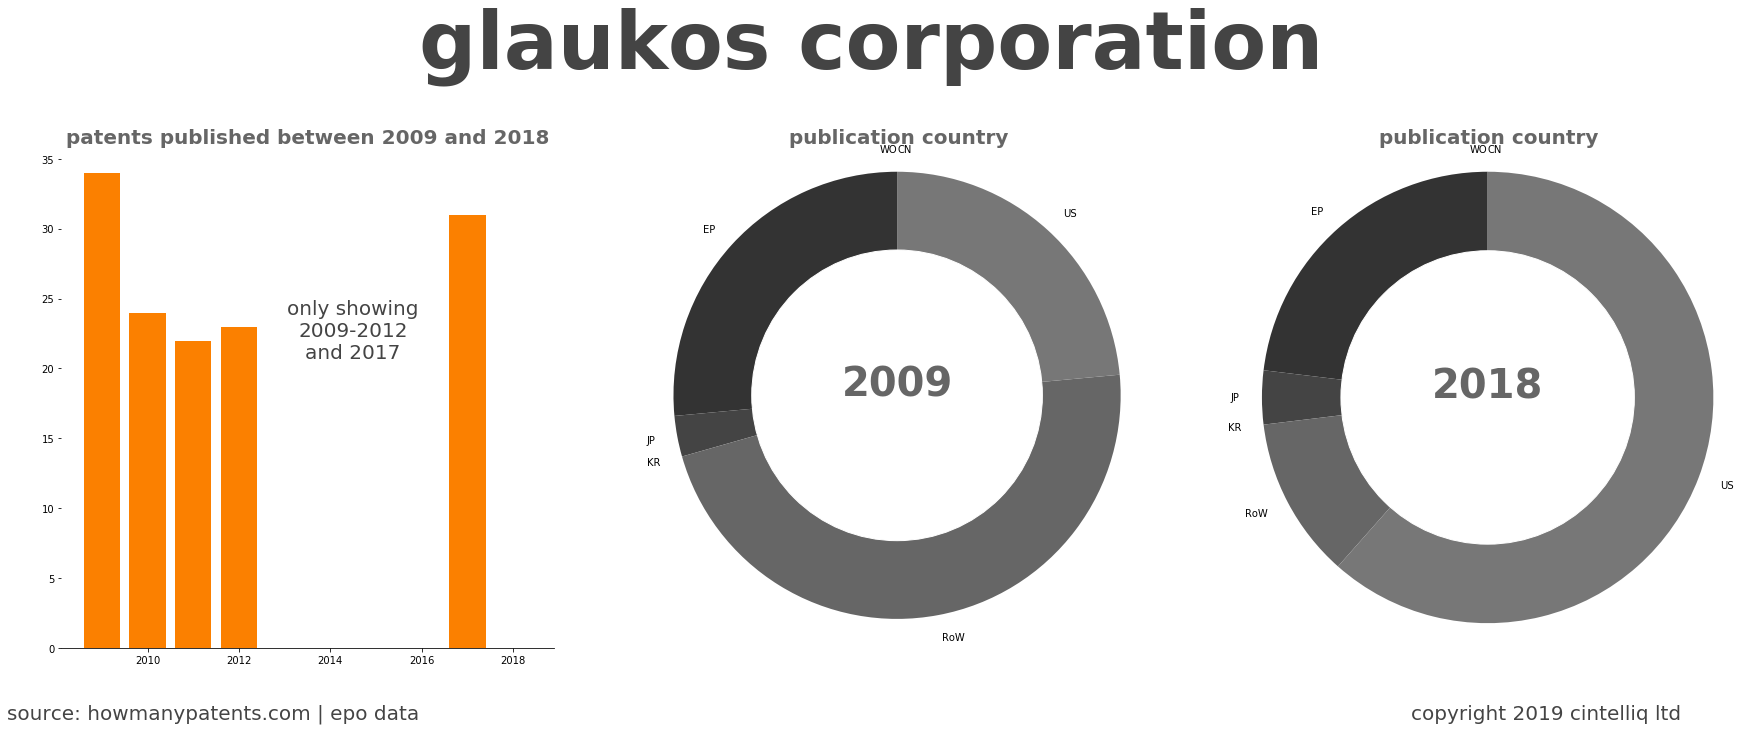 summary of patents for Glaukos Corporation